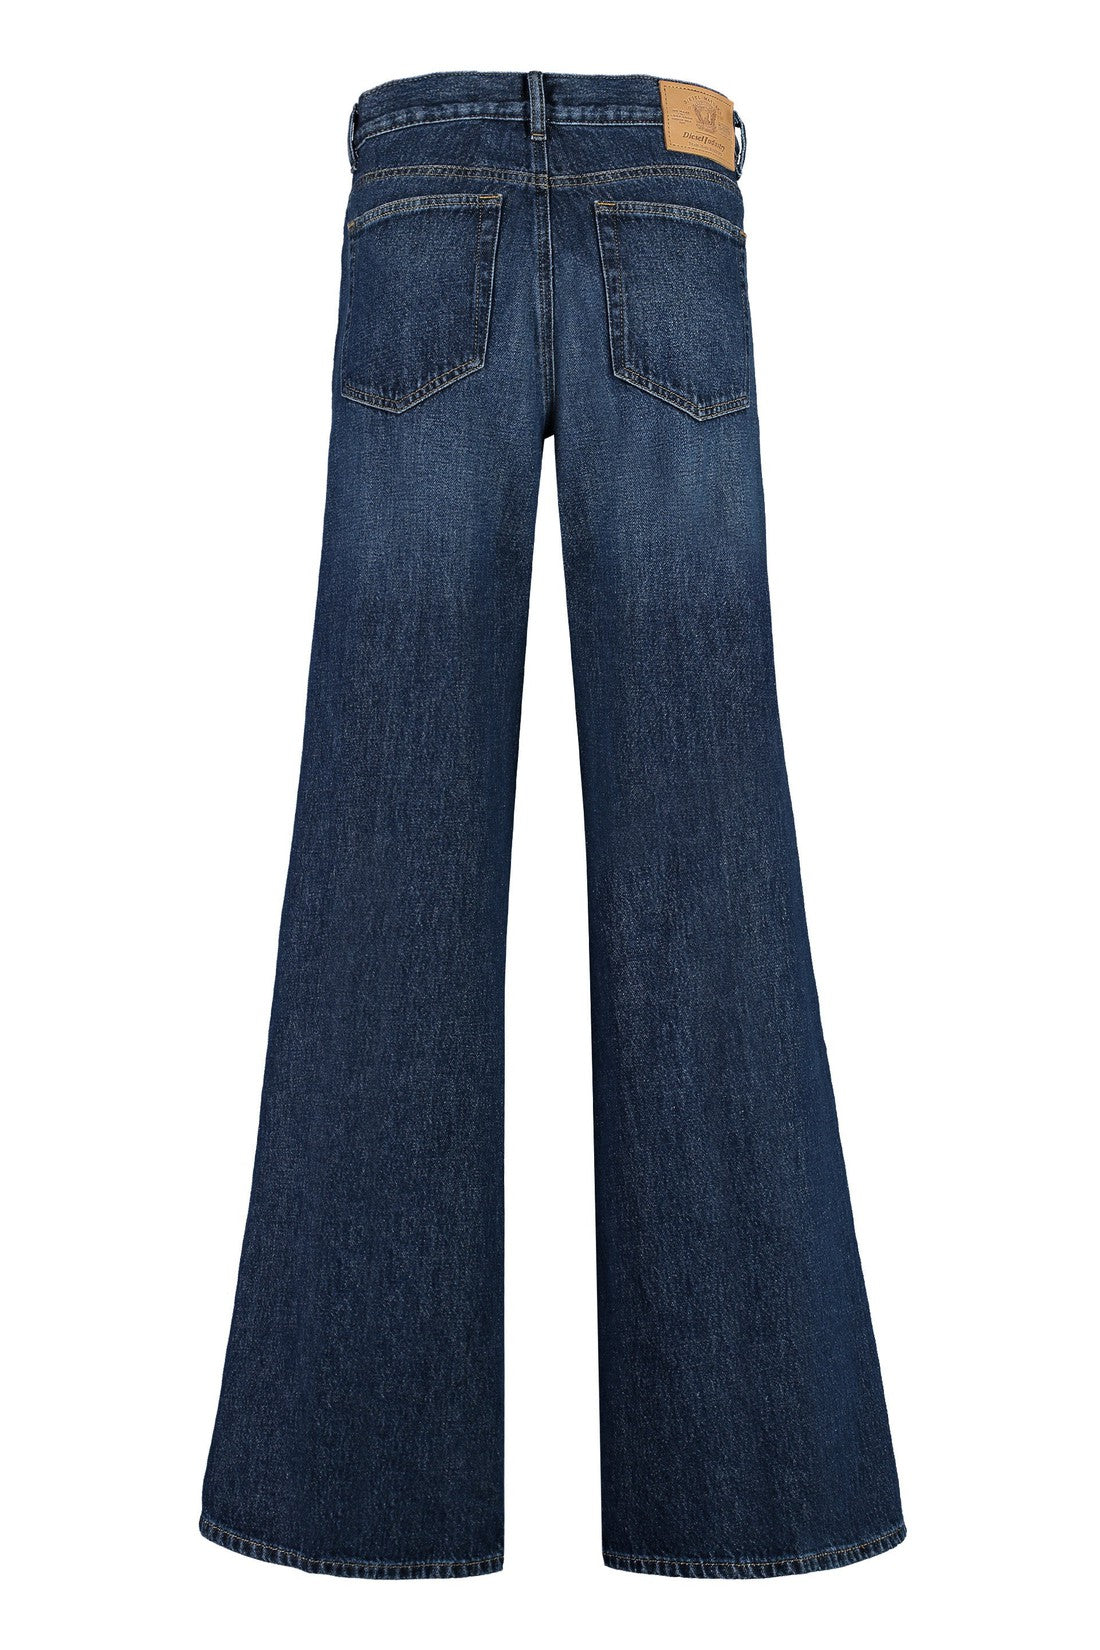 DIESEL-OUTLET-SALE-1978 D-Akemiflared jeans-ARCHIVIST